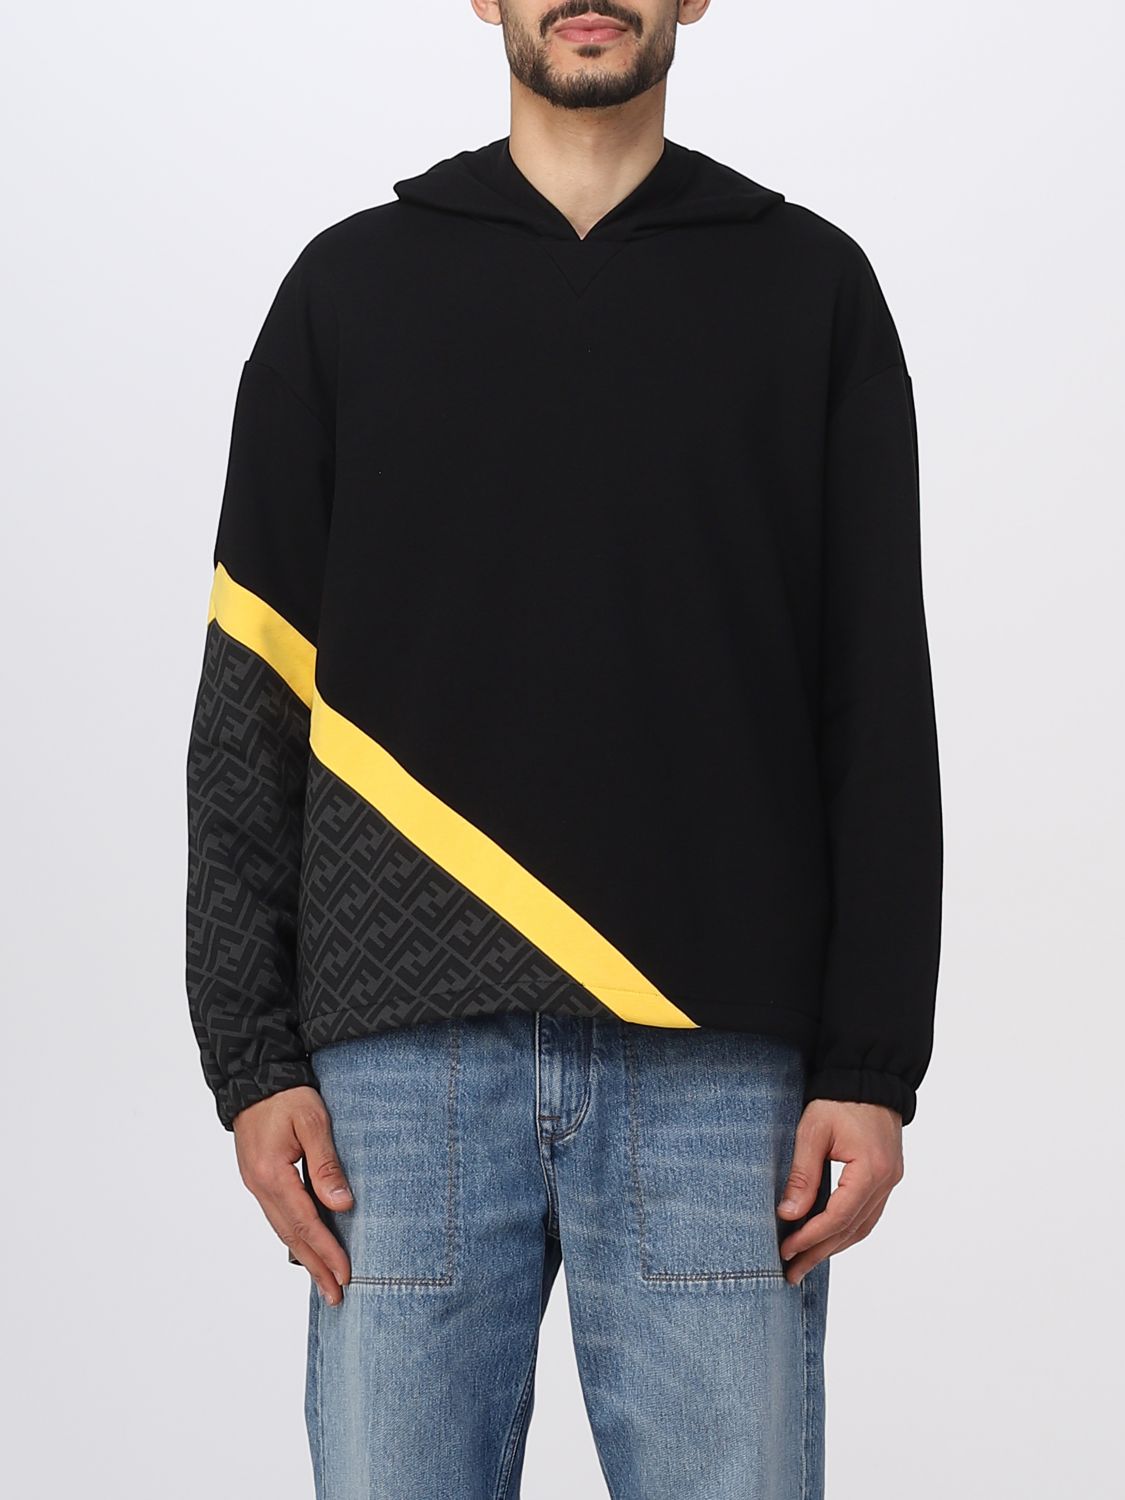 FENDI: cotton sweatshirt - Black | Fendi sweatshirt FAF681AN67 online ...